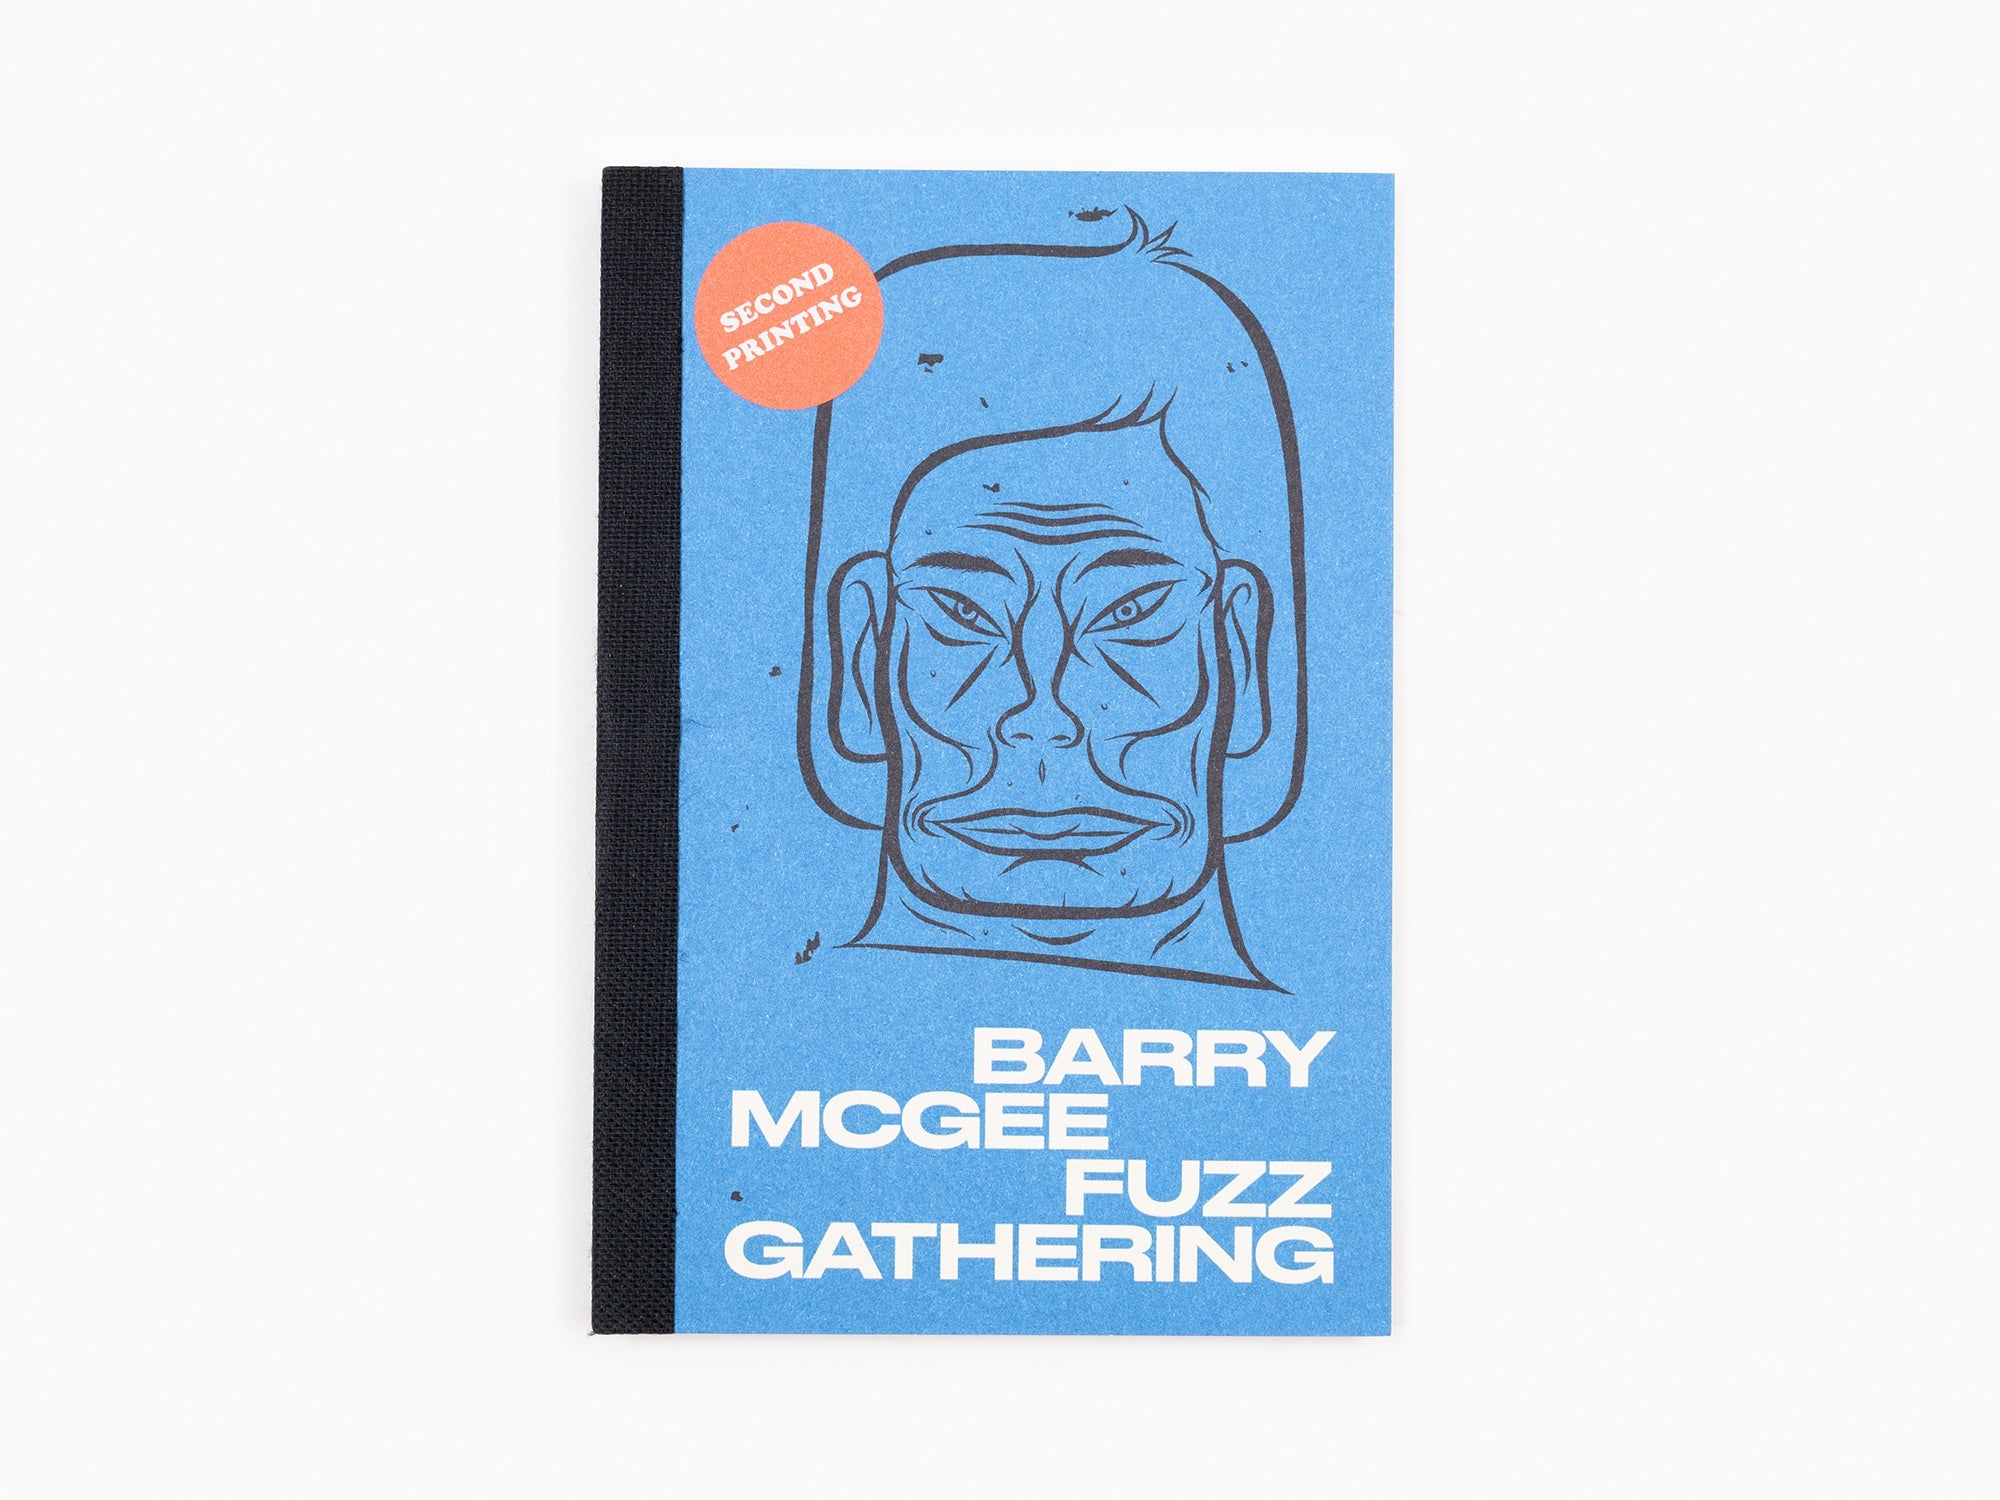 Barry McGee - Fuzz Gathering (fanzine, 2e édition de print )